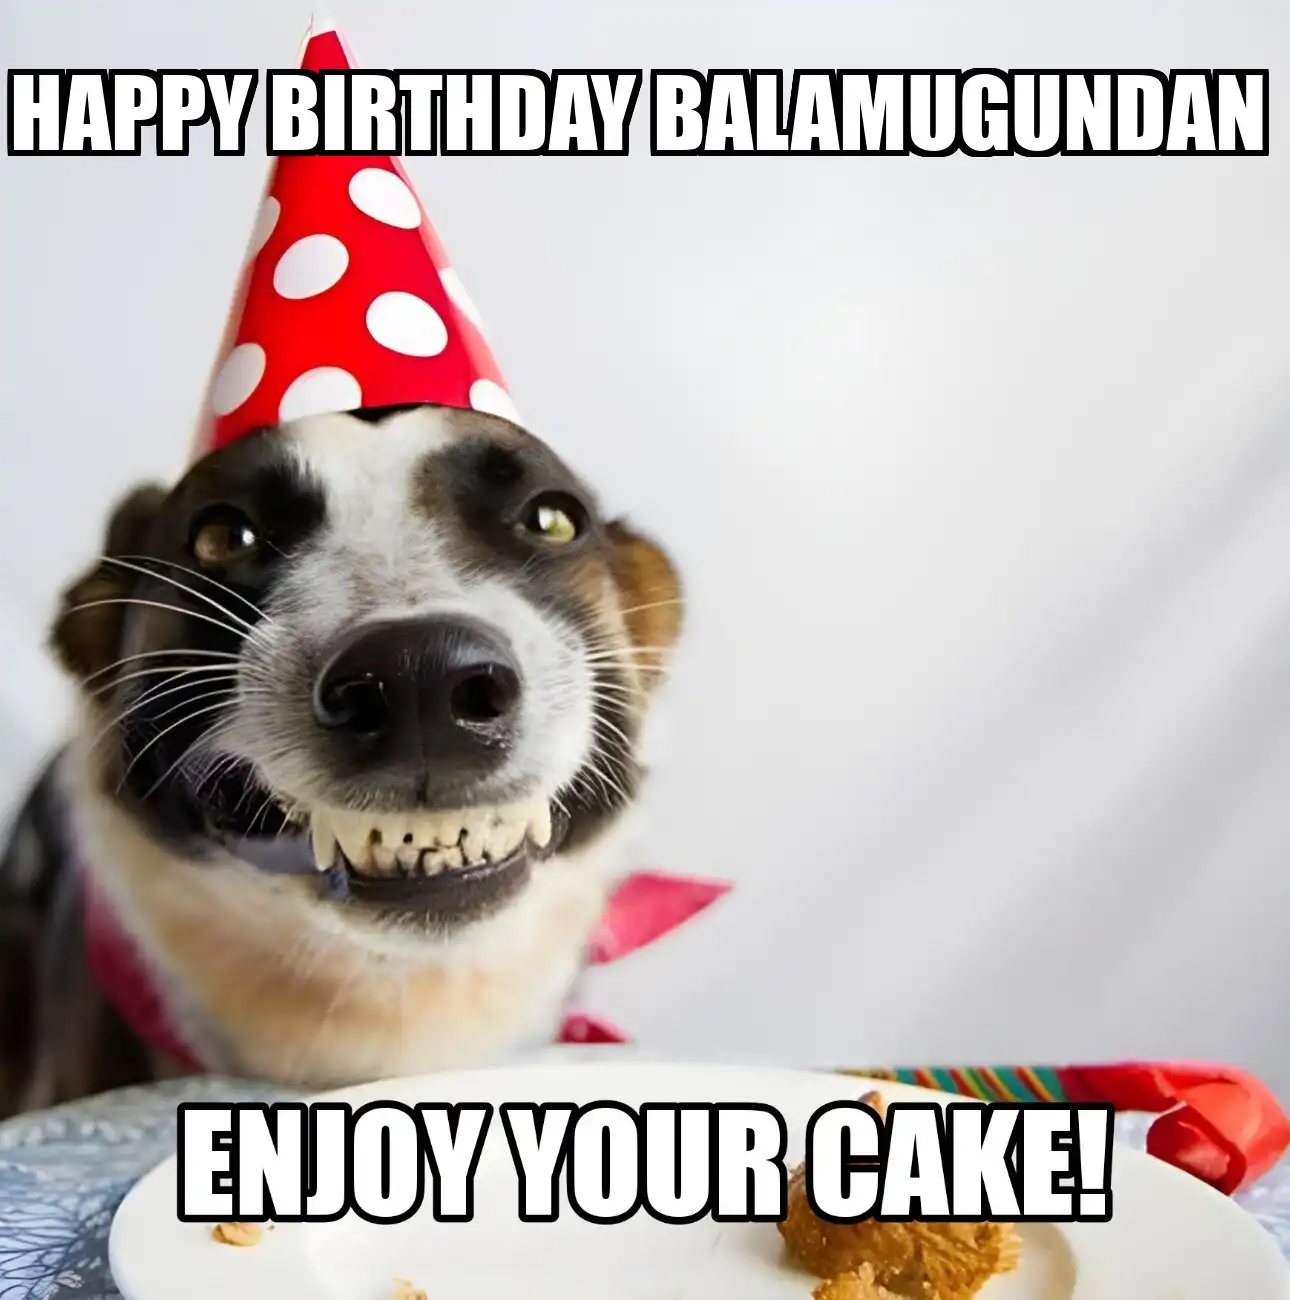 Happy Birthday Balamugundan Enjoy Your Cake Dog Meme